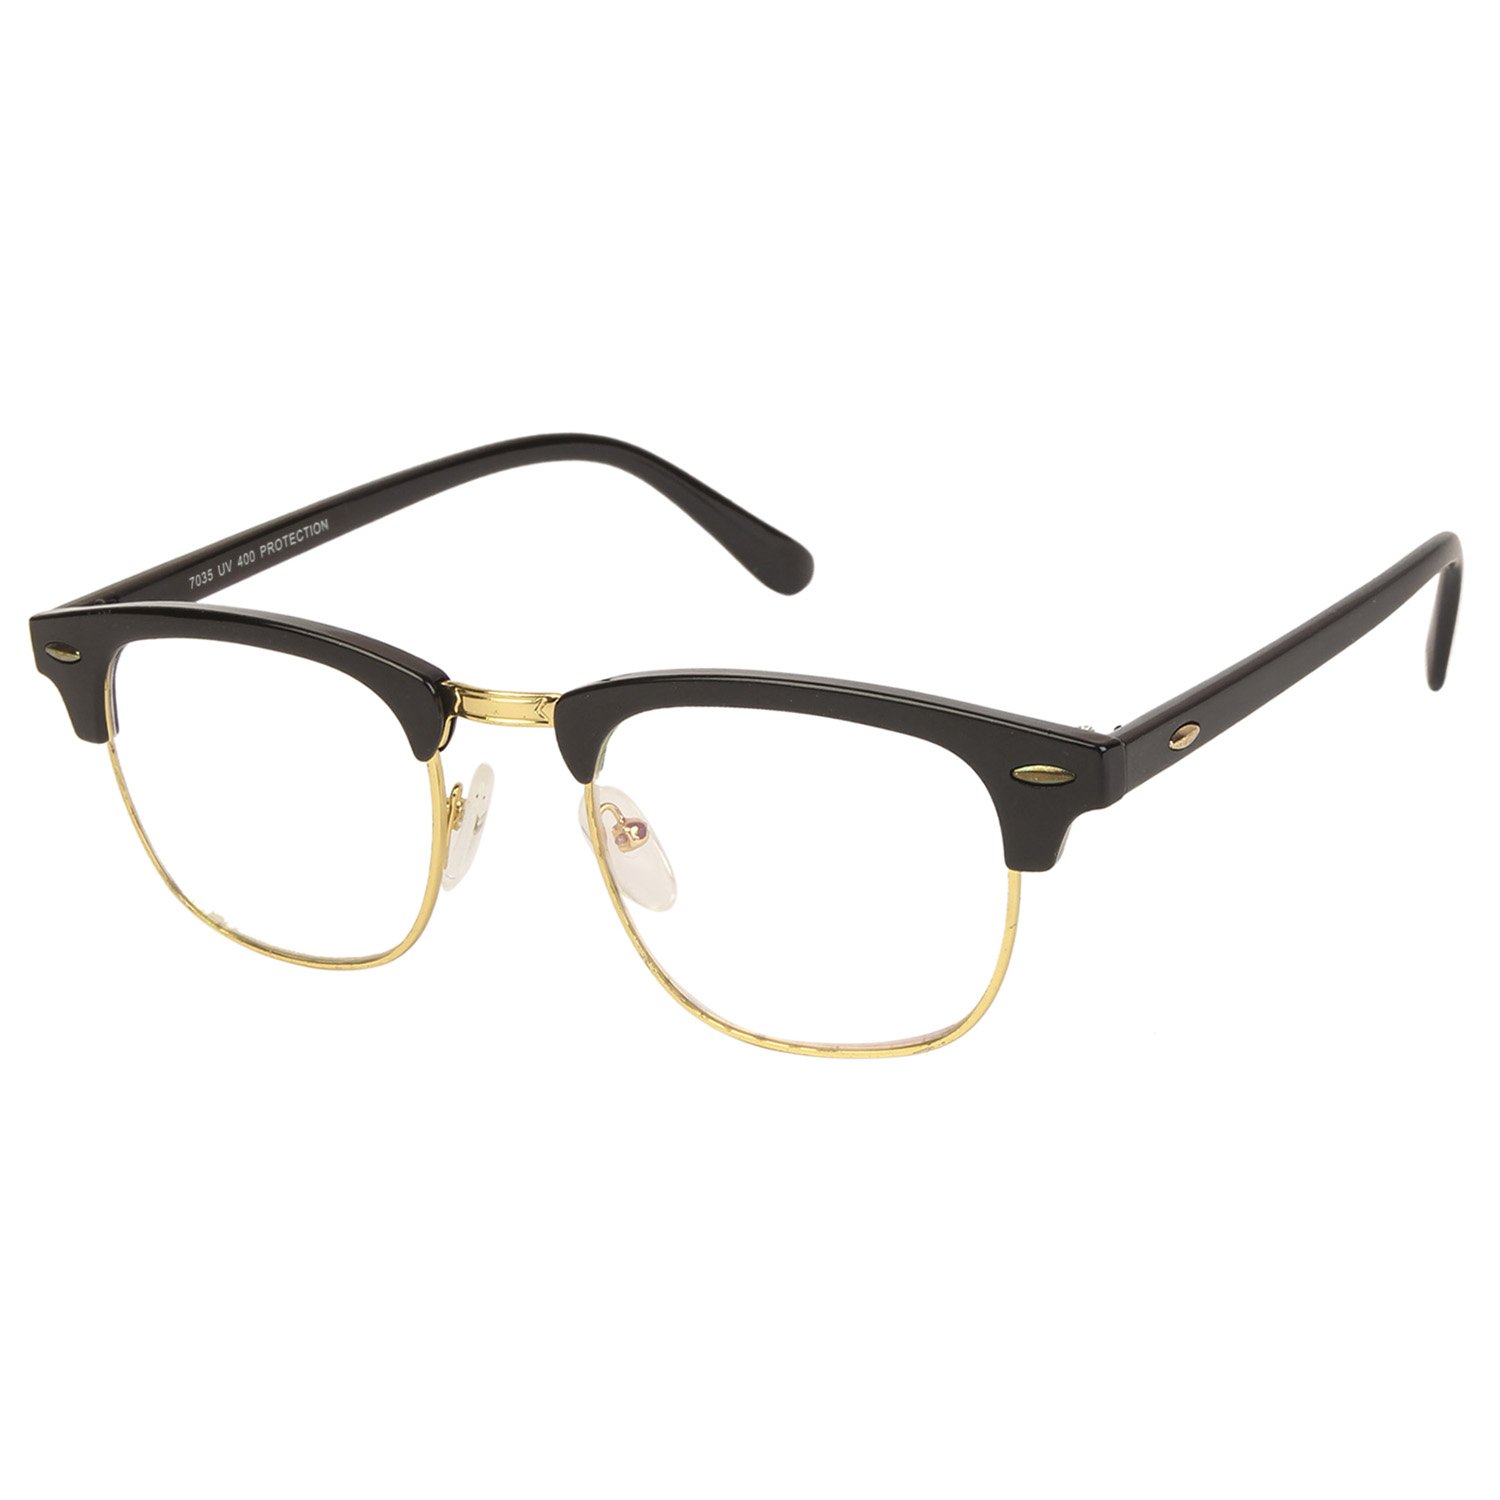 Black Clubmaster Keymount Computer Glasses Eyeglasses